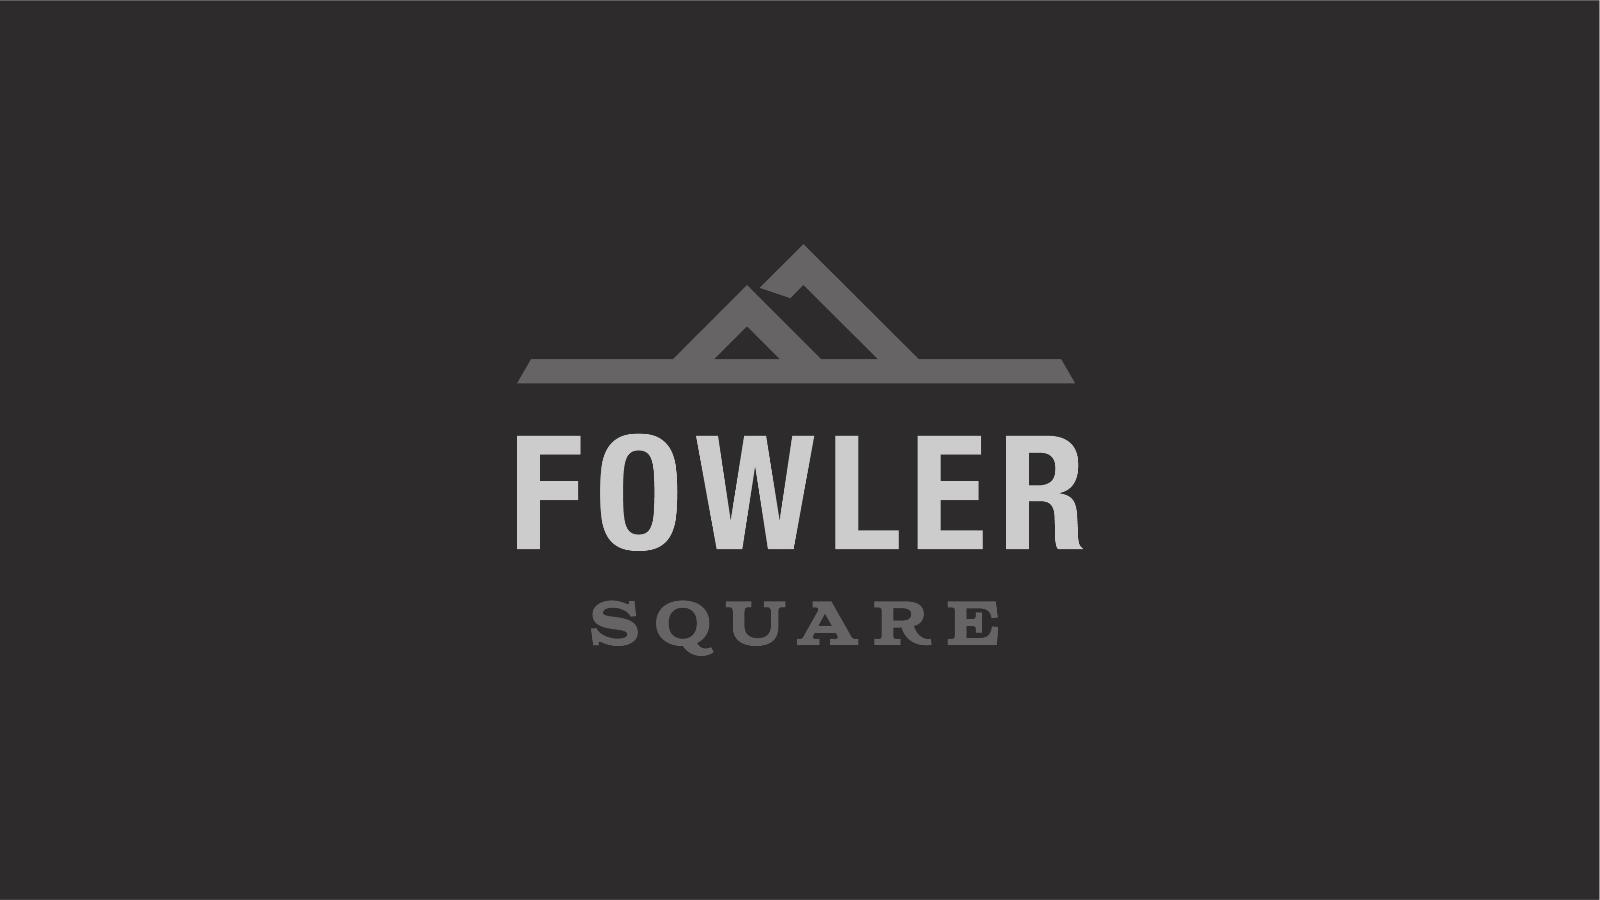 Fowler Square | grayscale logo on dark